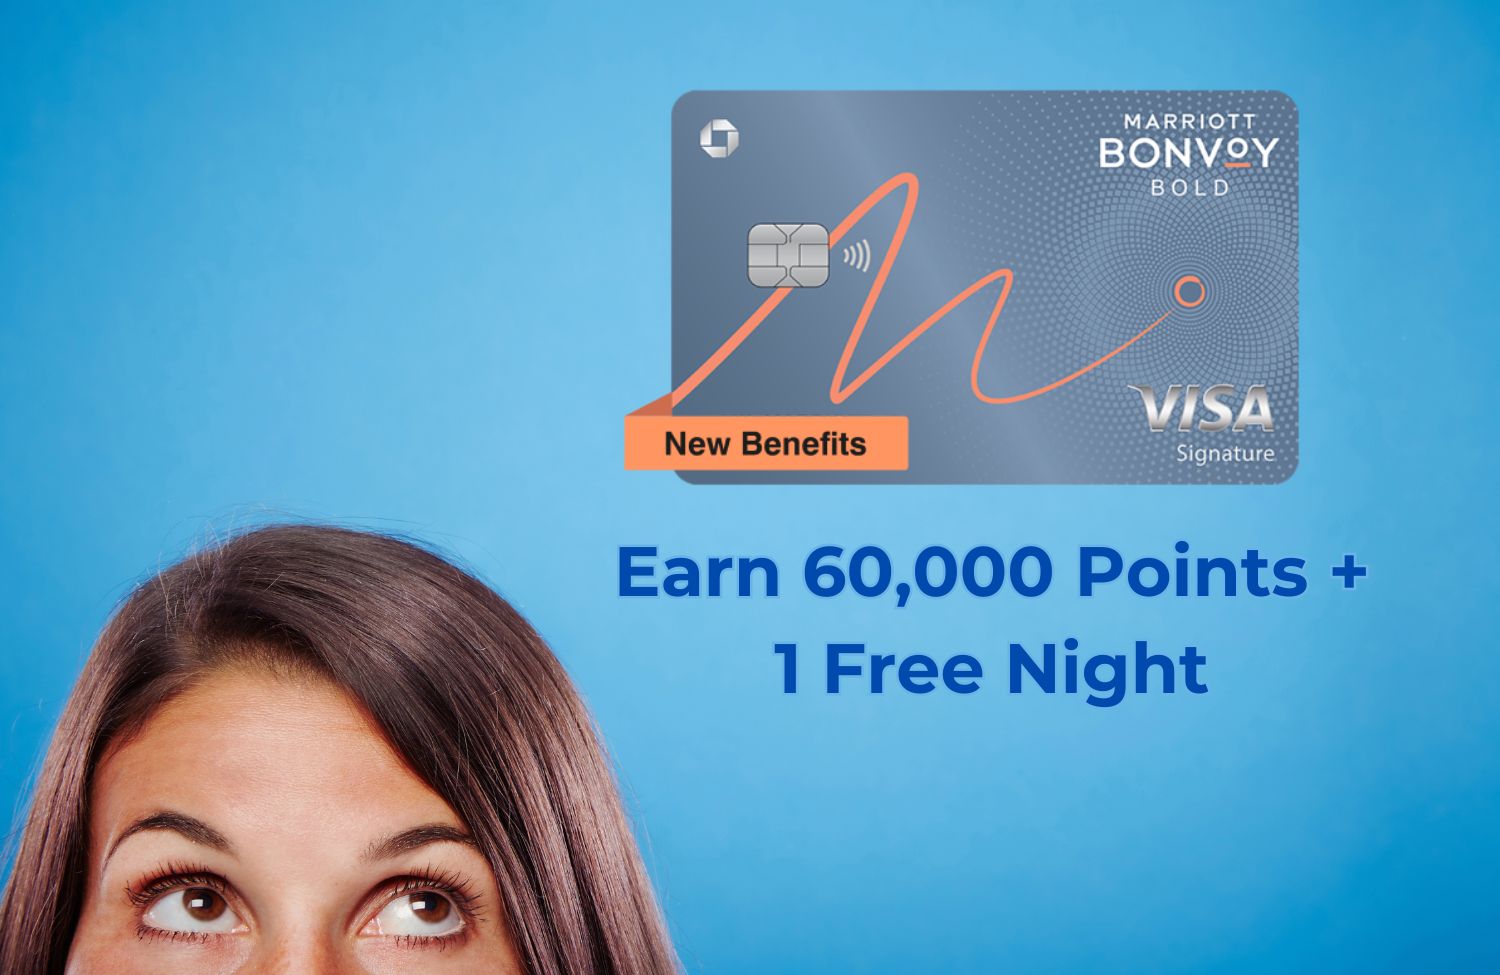 best offer for marriott bonvoy bold card earn 60000 points 1 free night